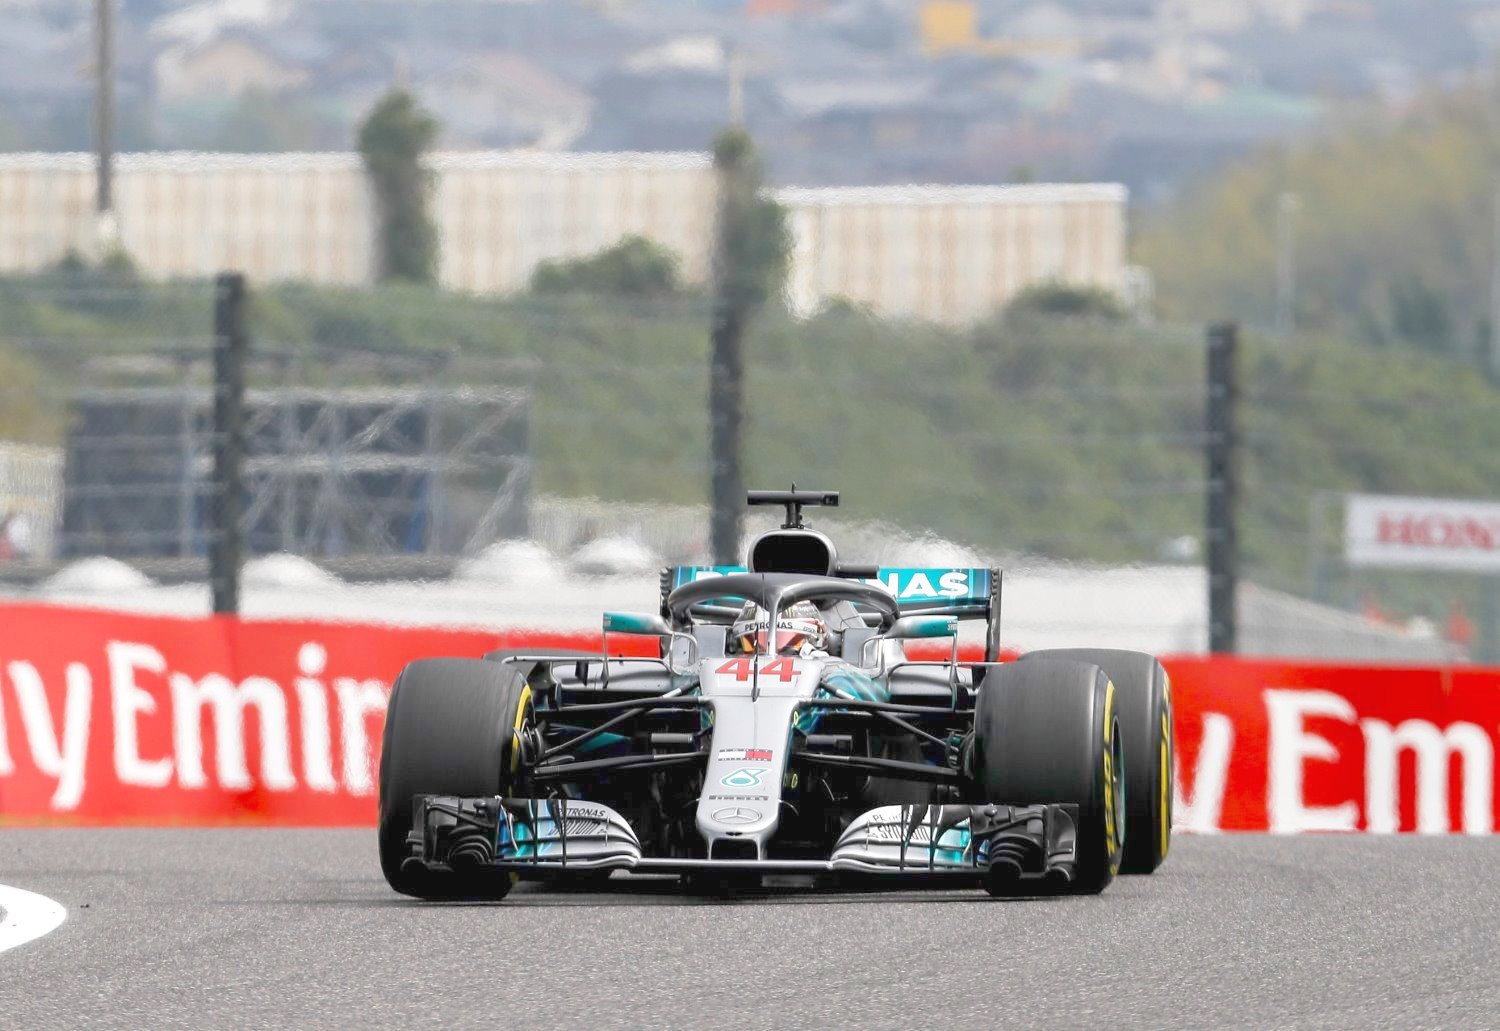 Hamilton and Mercedes crush Ferrari and are almost guaranteed the 2018 titles